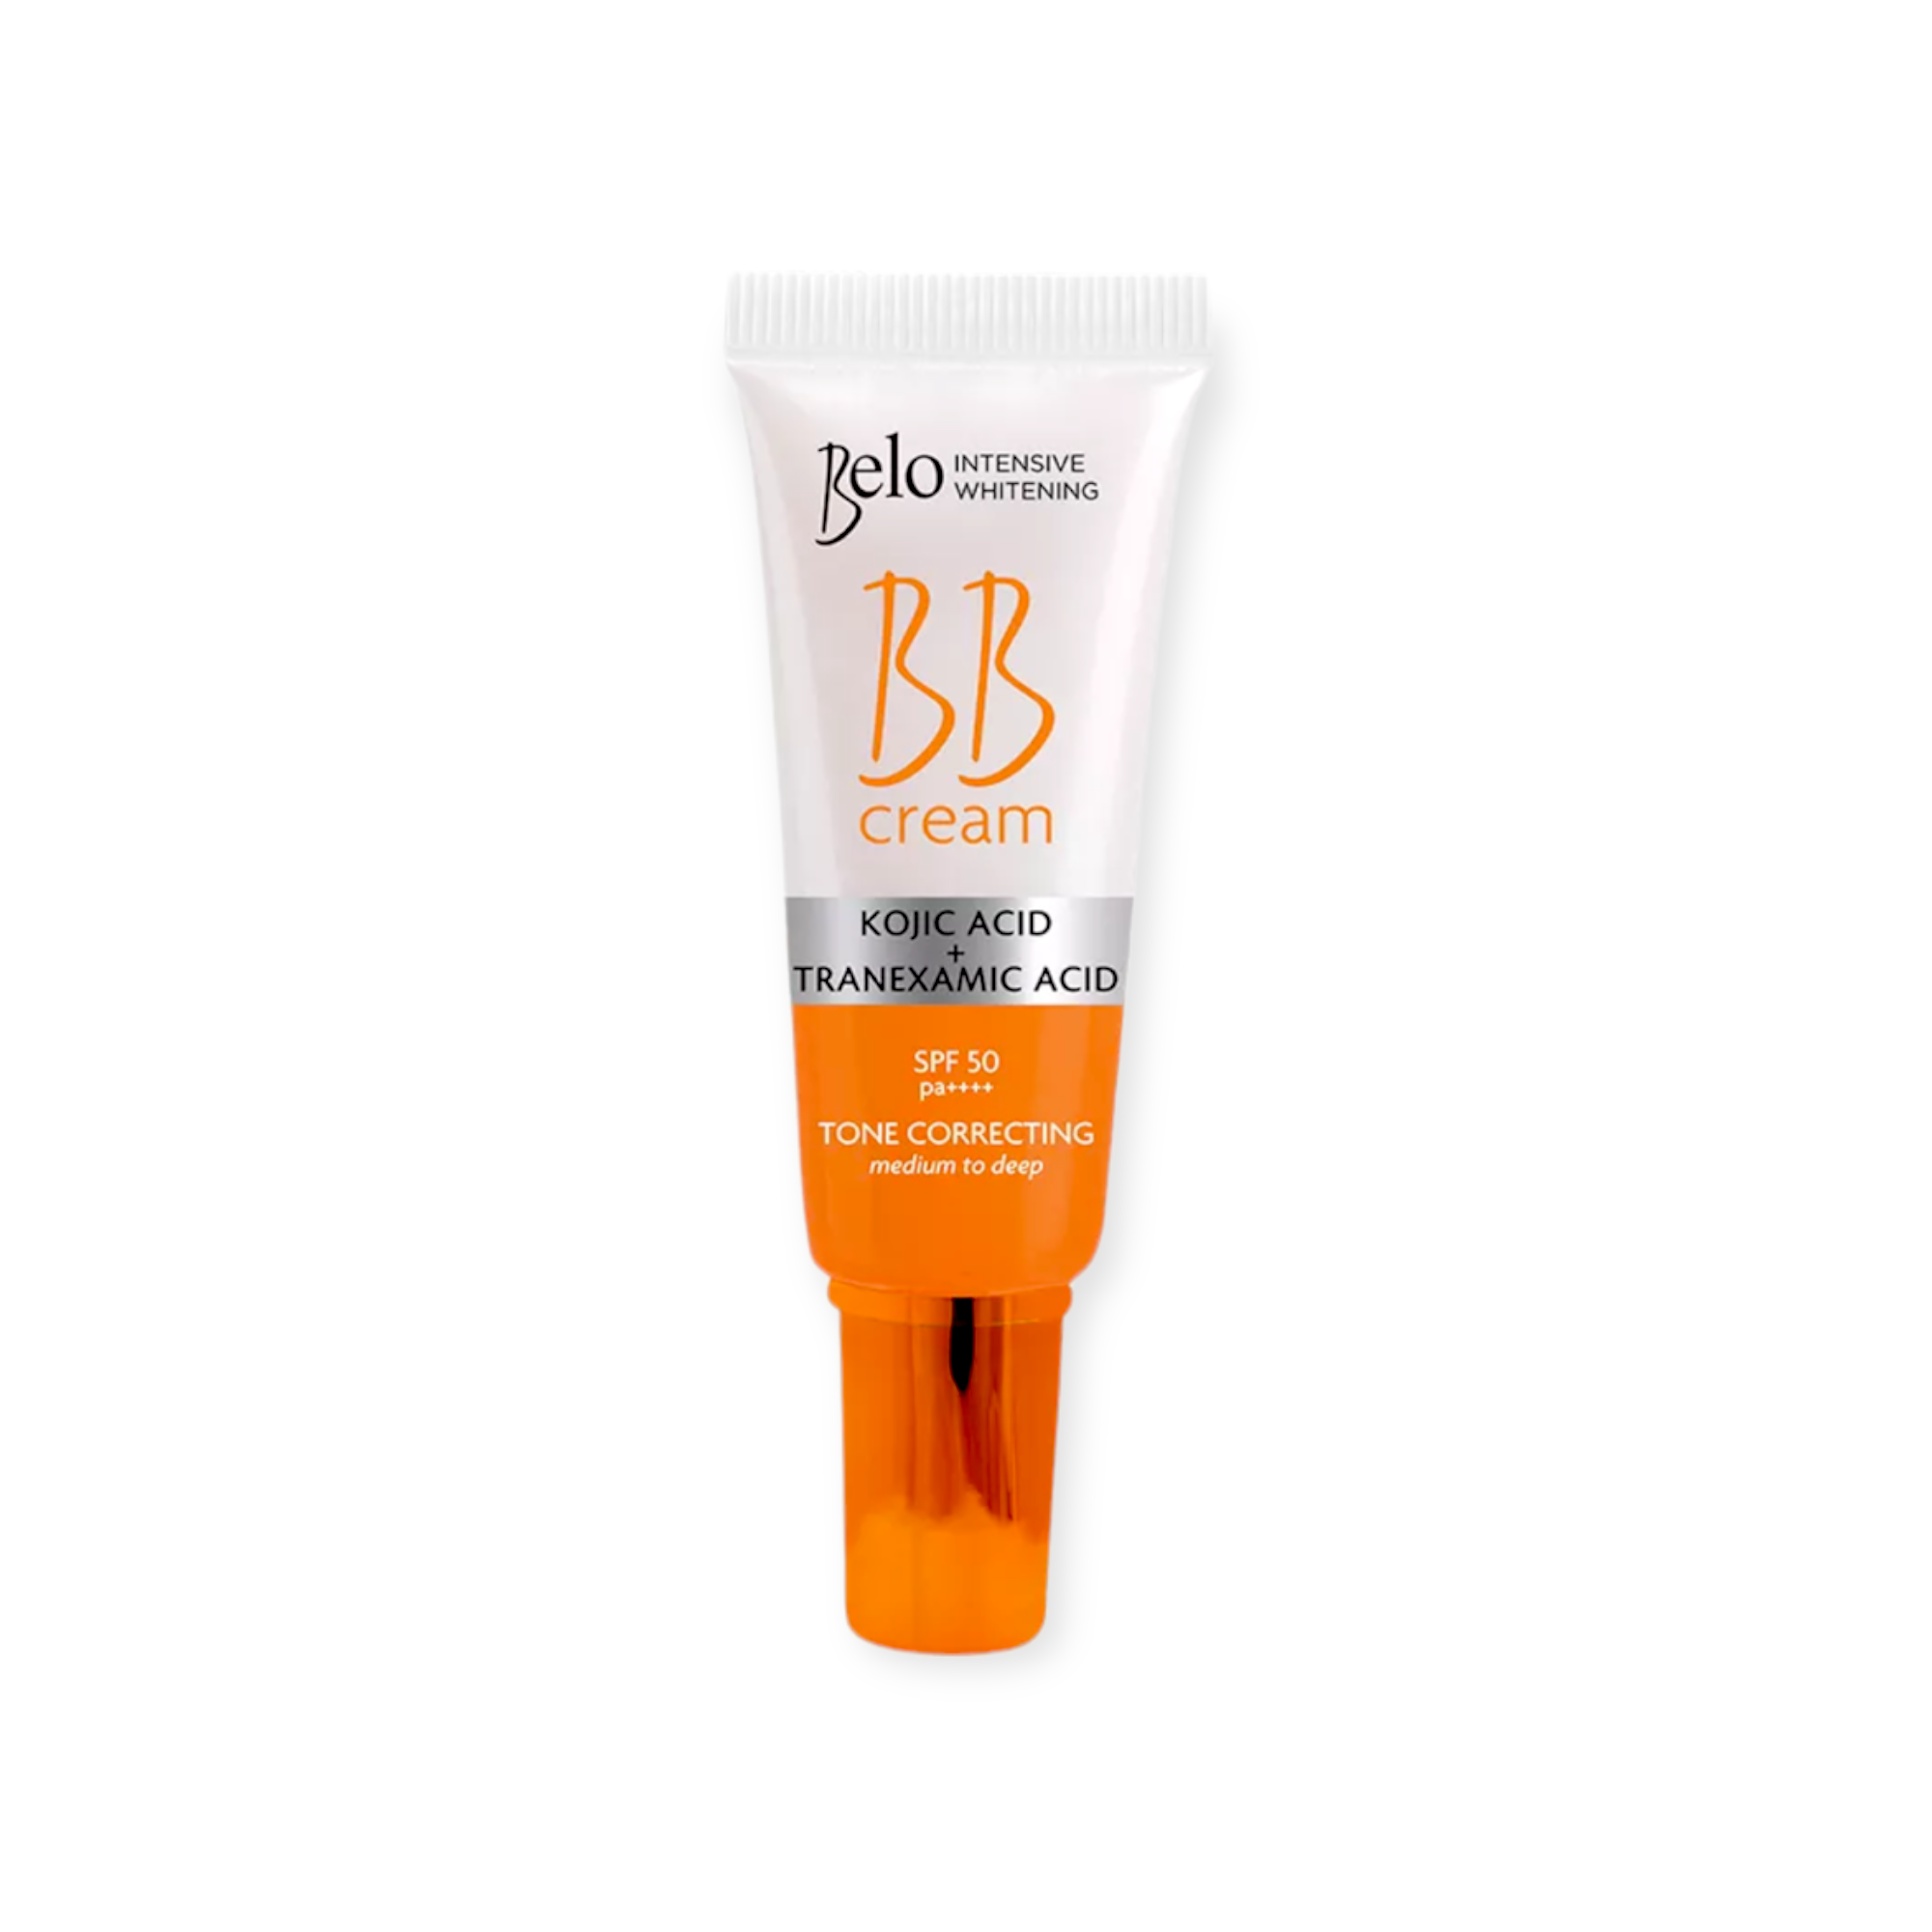 Belo Intensive Whitening Bb Cream SPF 50 -